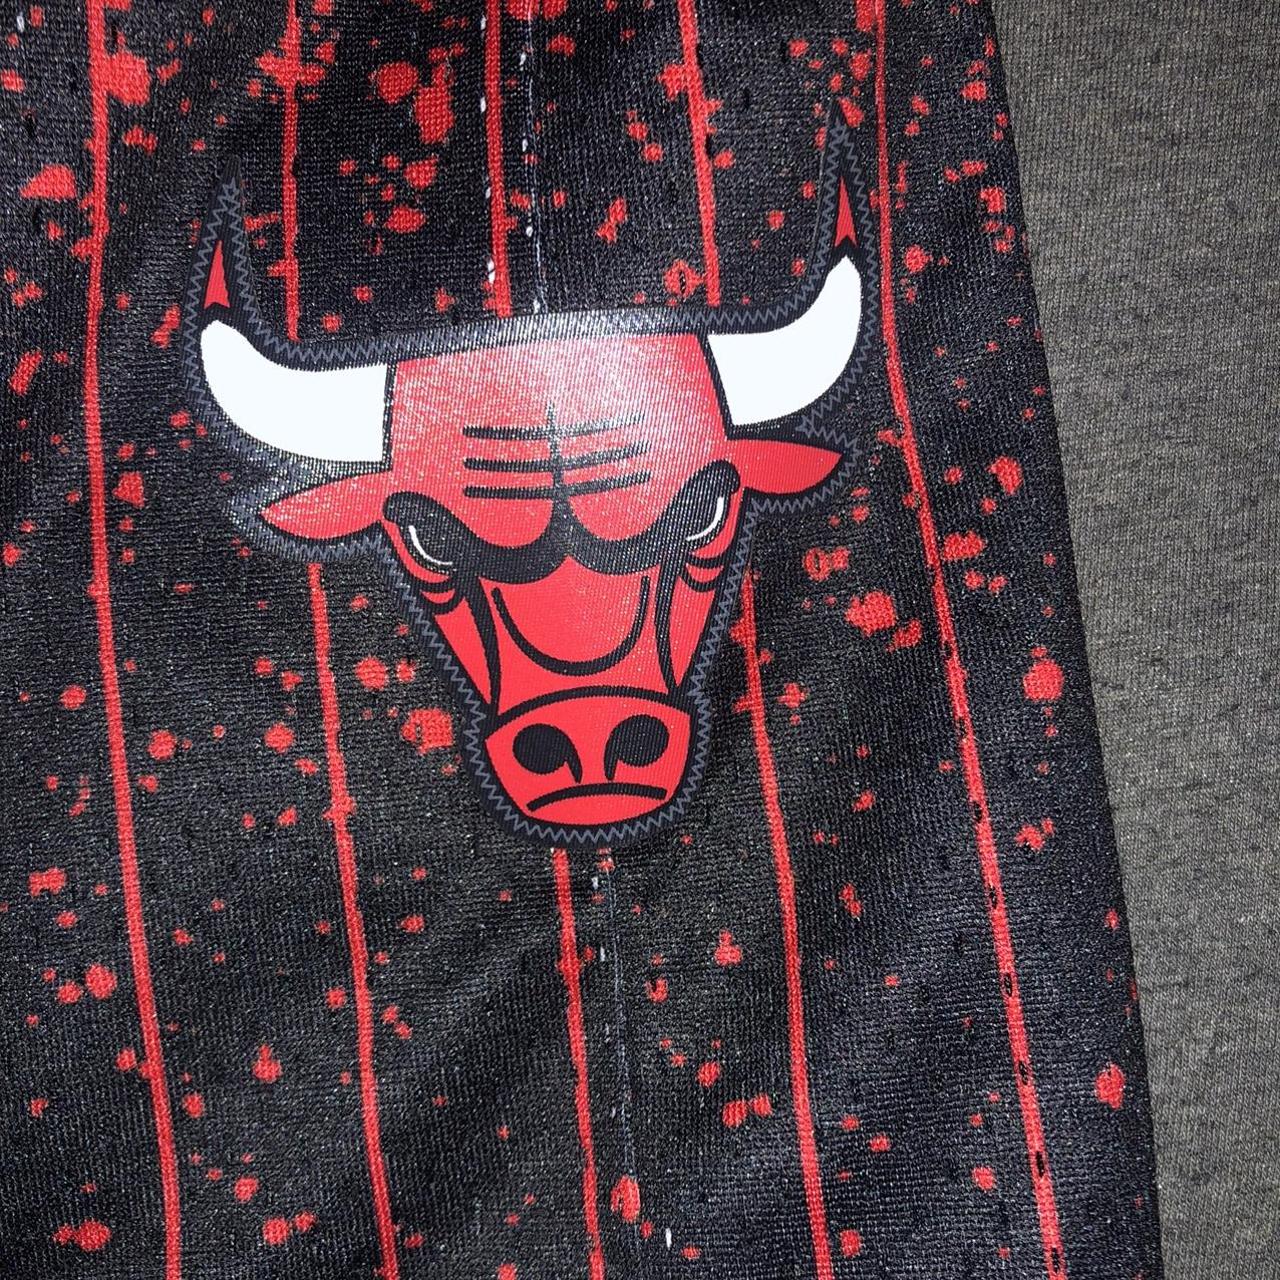 Chicago Bulls NBA Mitchell & Ness Black Red - Depop